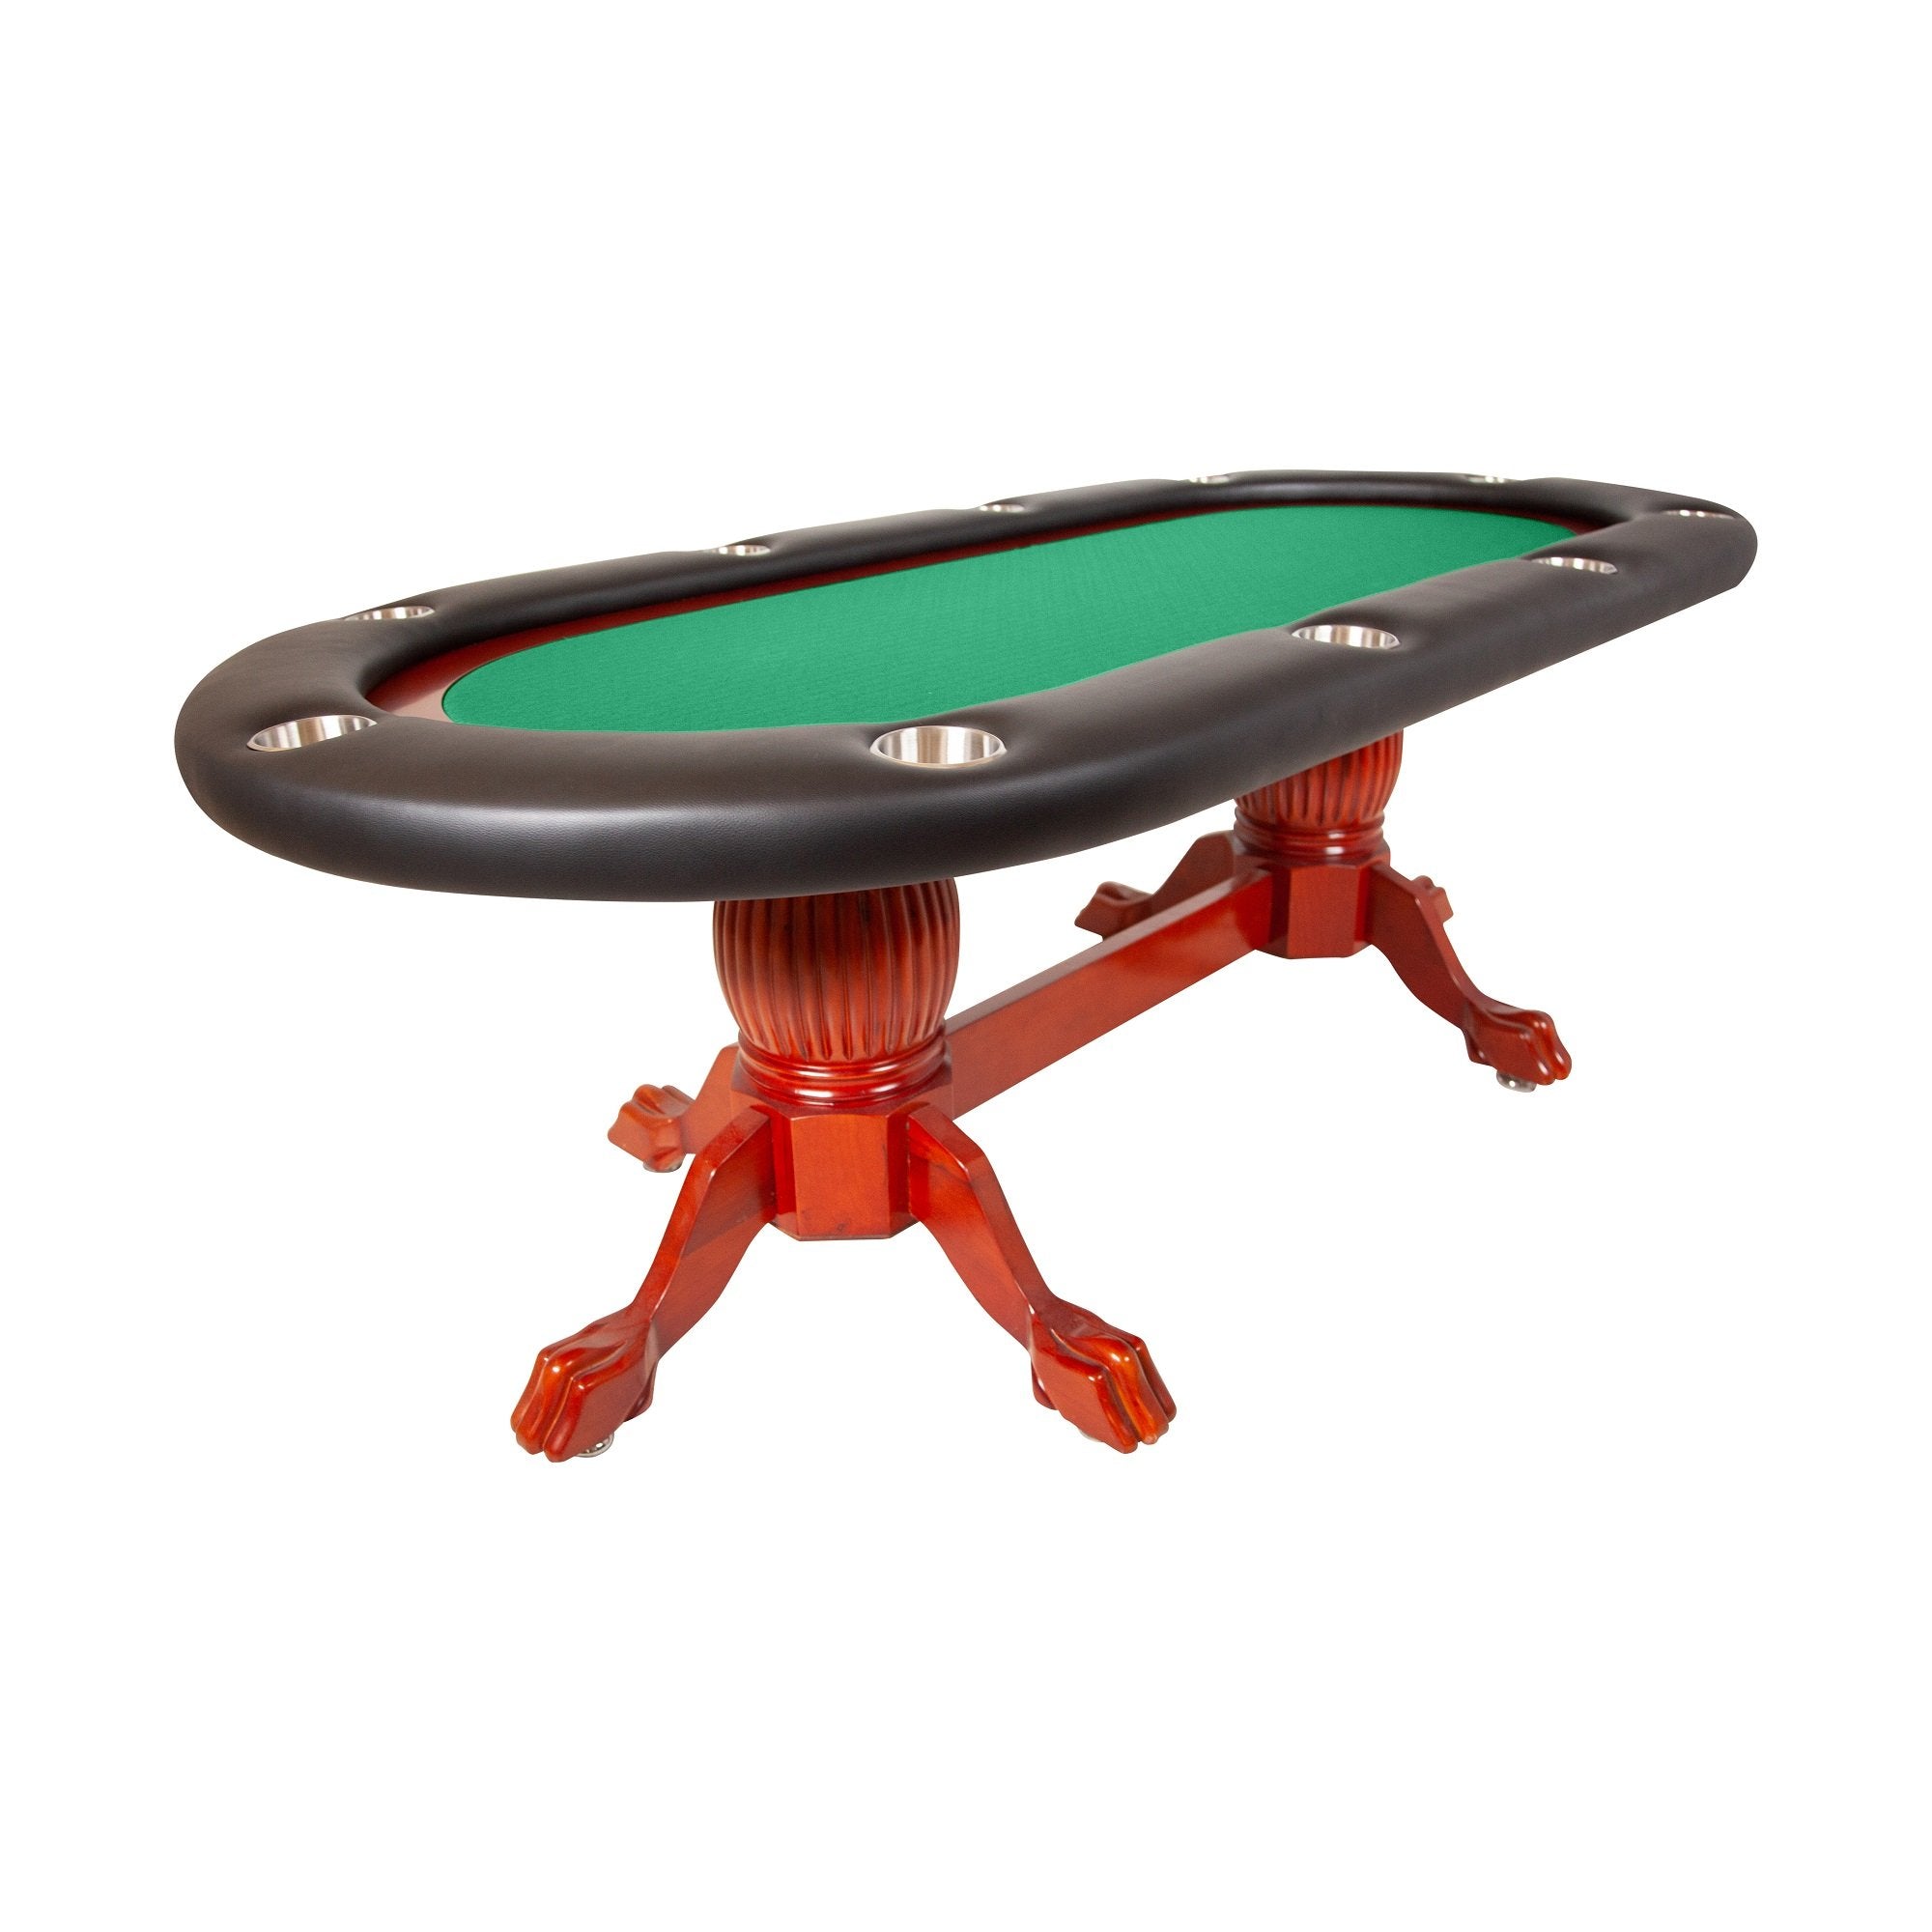 Bbo the elite poker table Mahogany Elite green surface